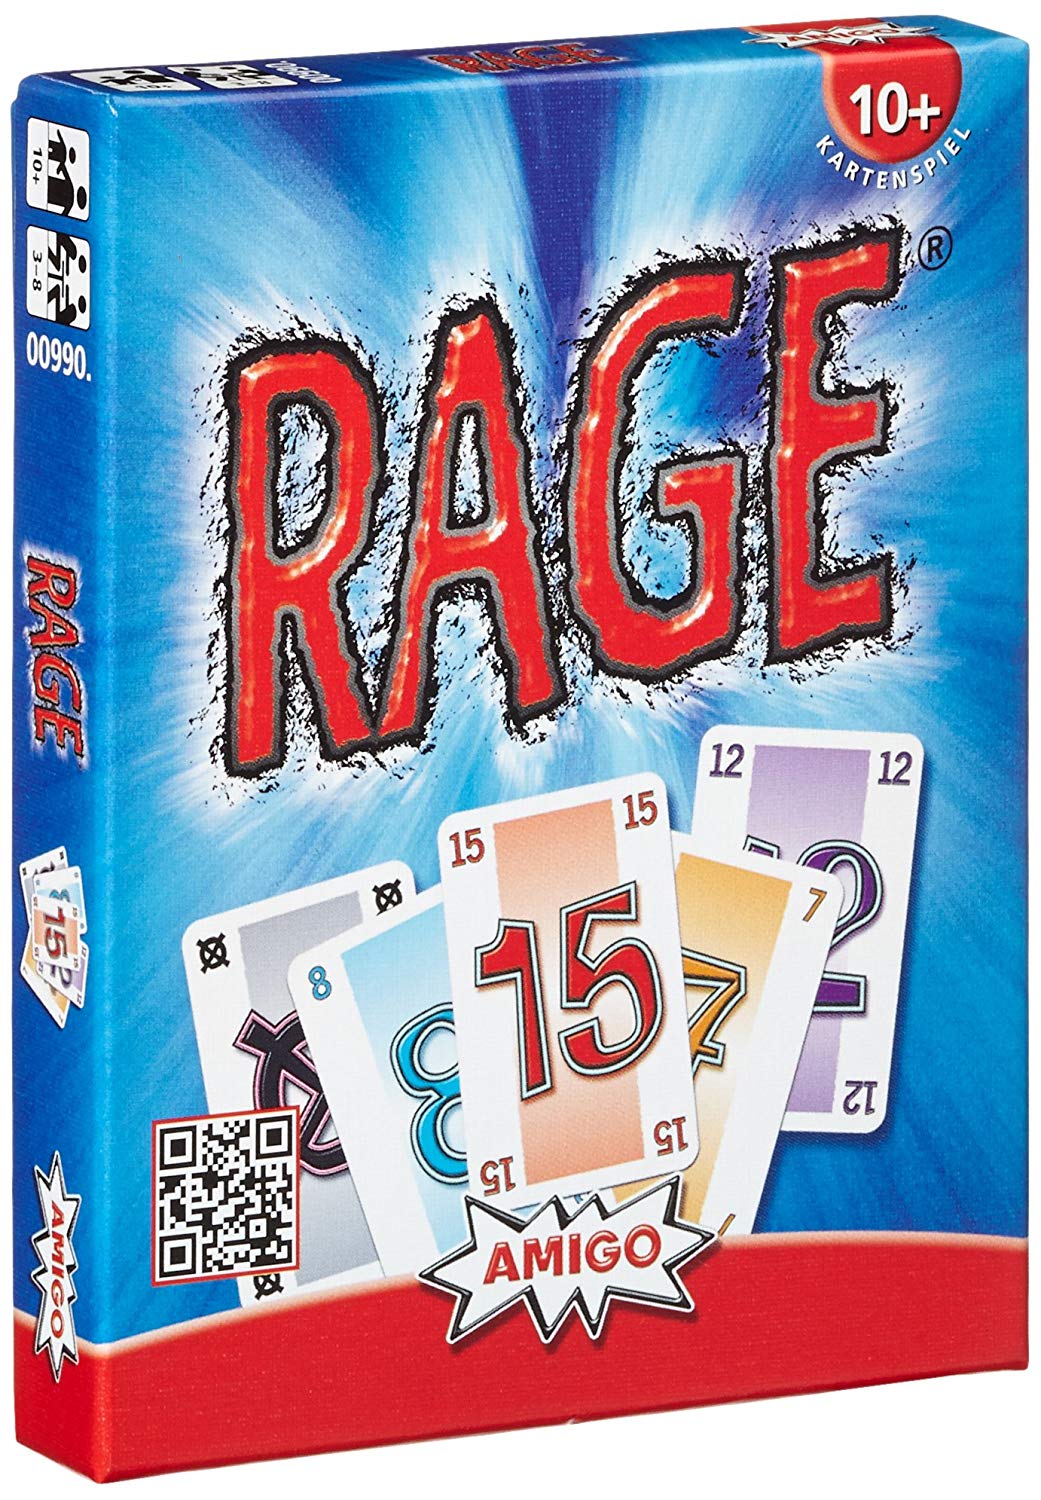 Amigo Rage Players Aged